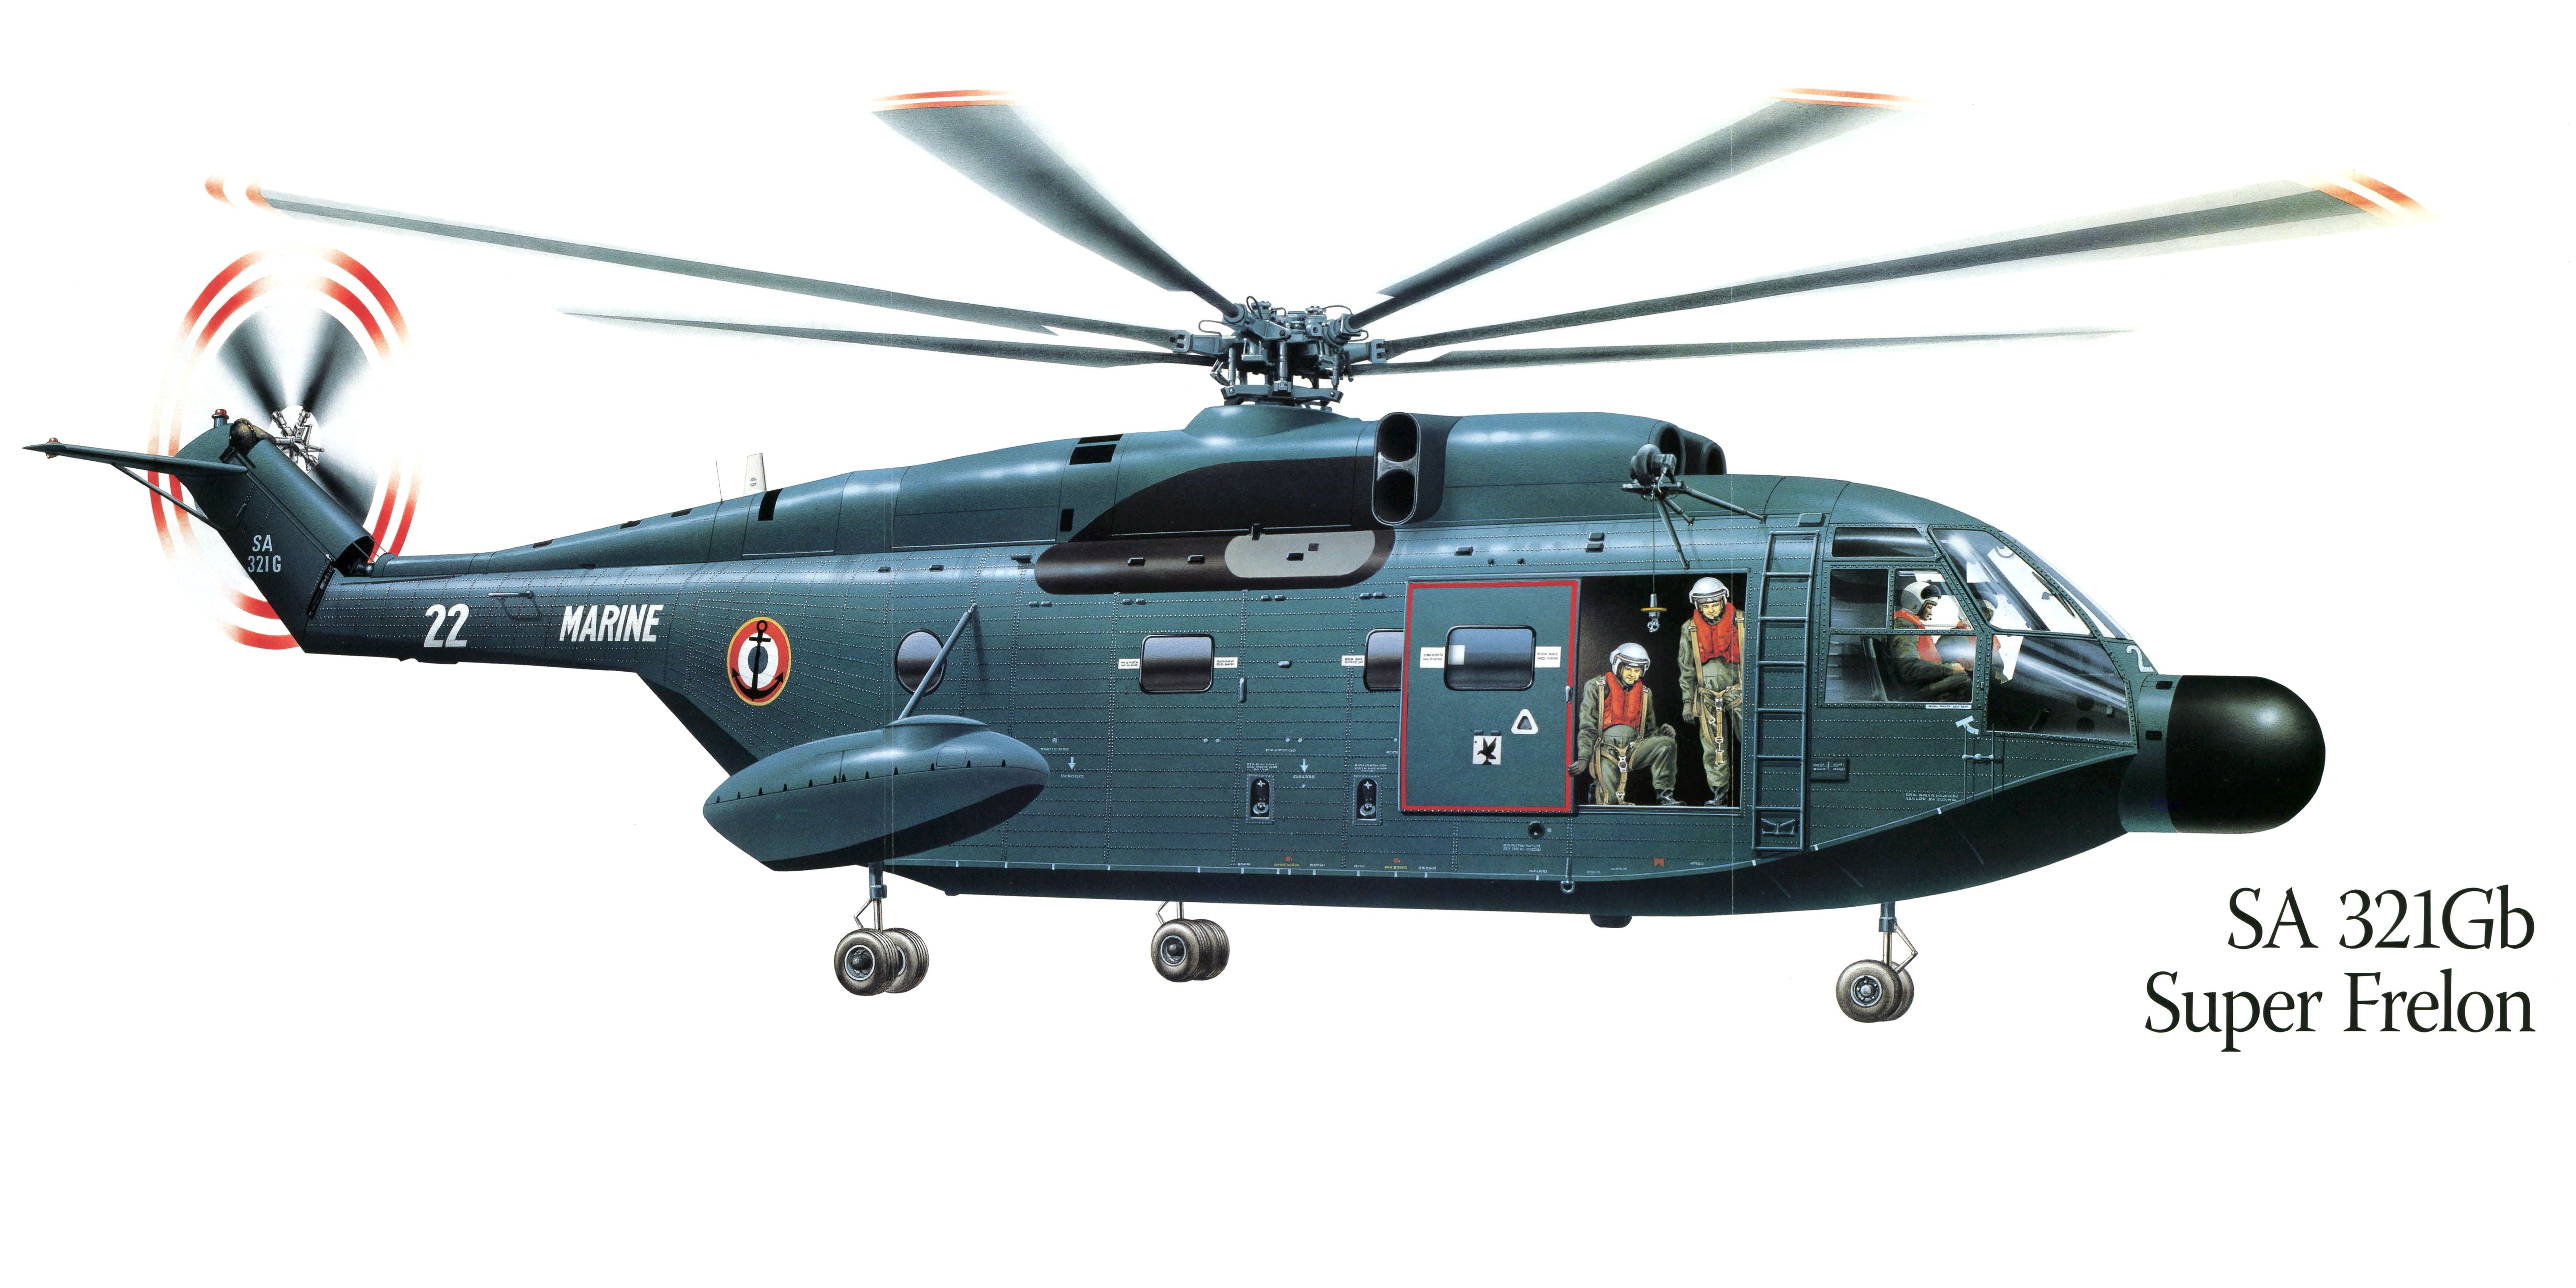 sa 321gb, Super, Frelon, Military, Helicopter, Aircraft Wallpaper